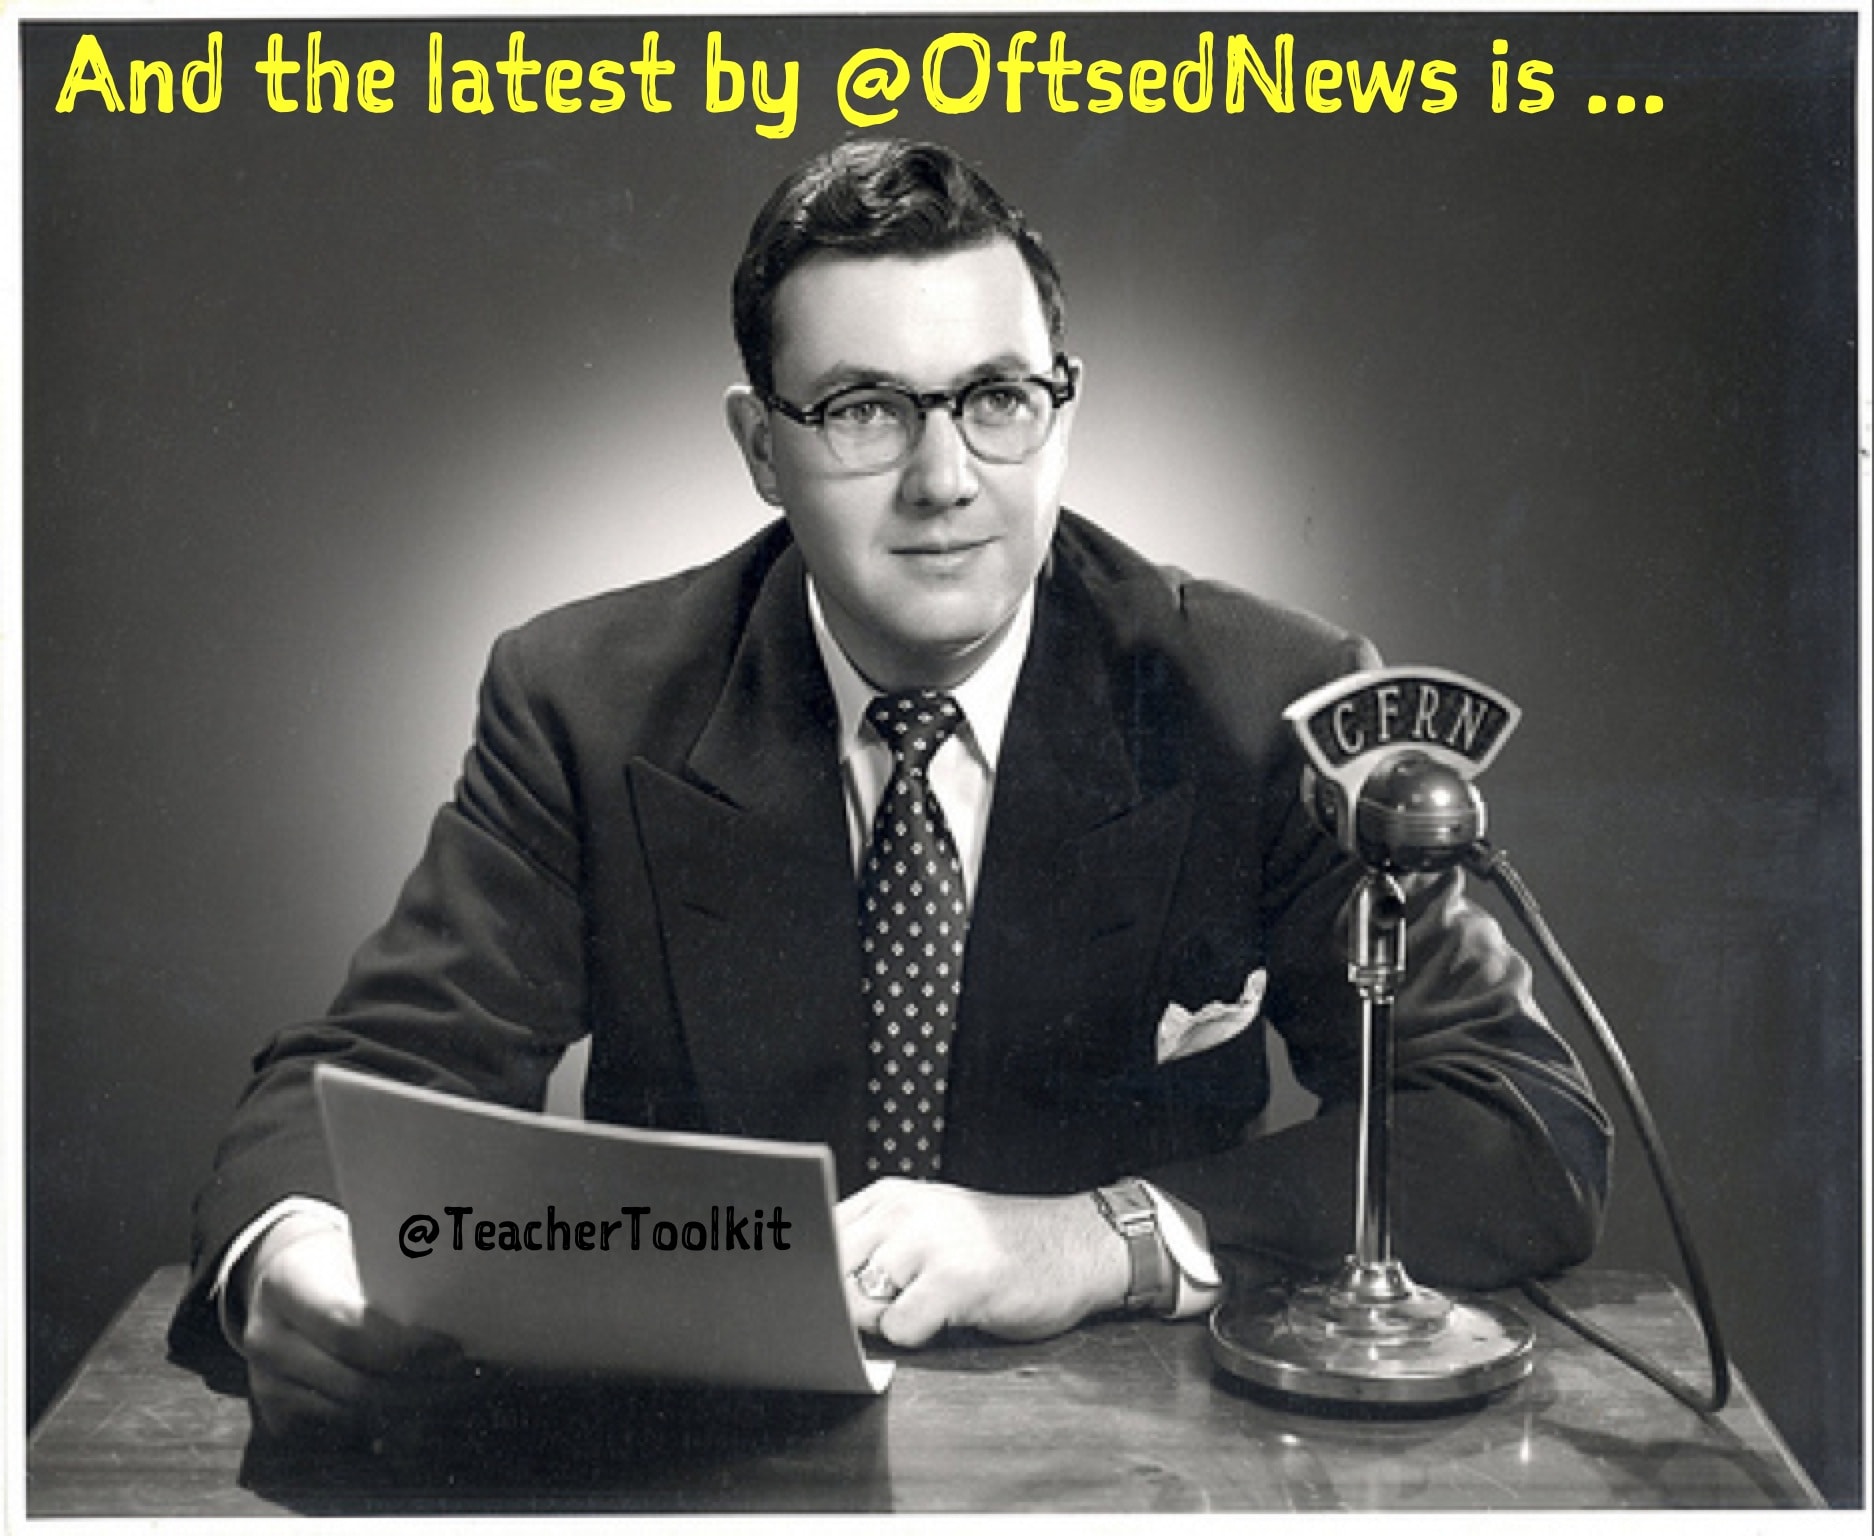 @TeacherToolkit @OfstedNews updates by Ofsted